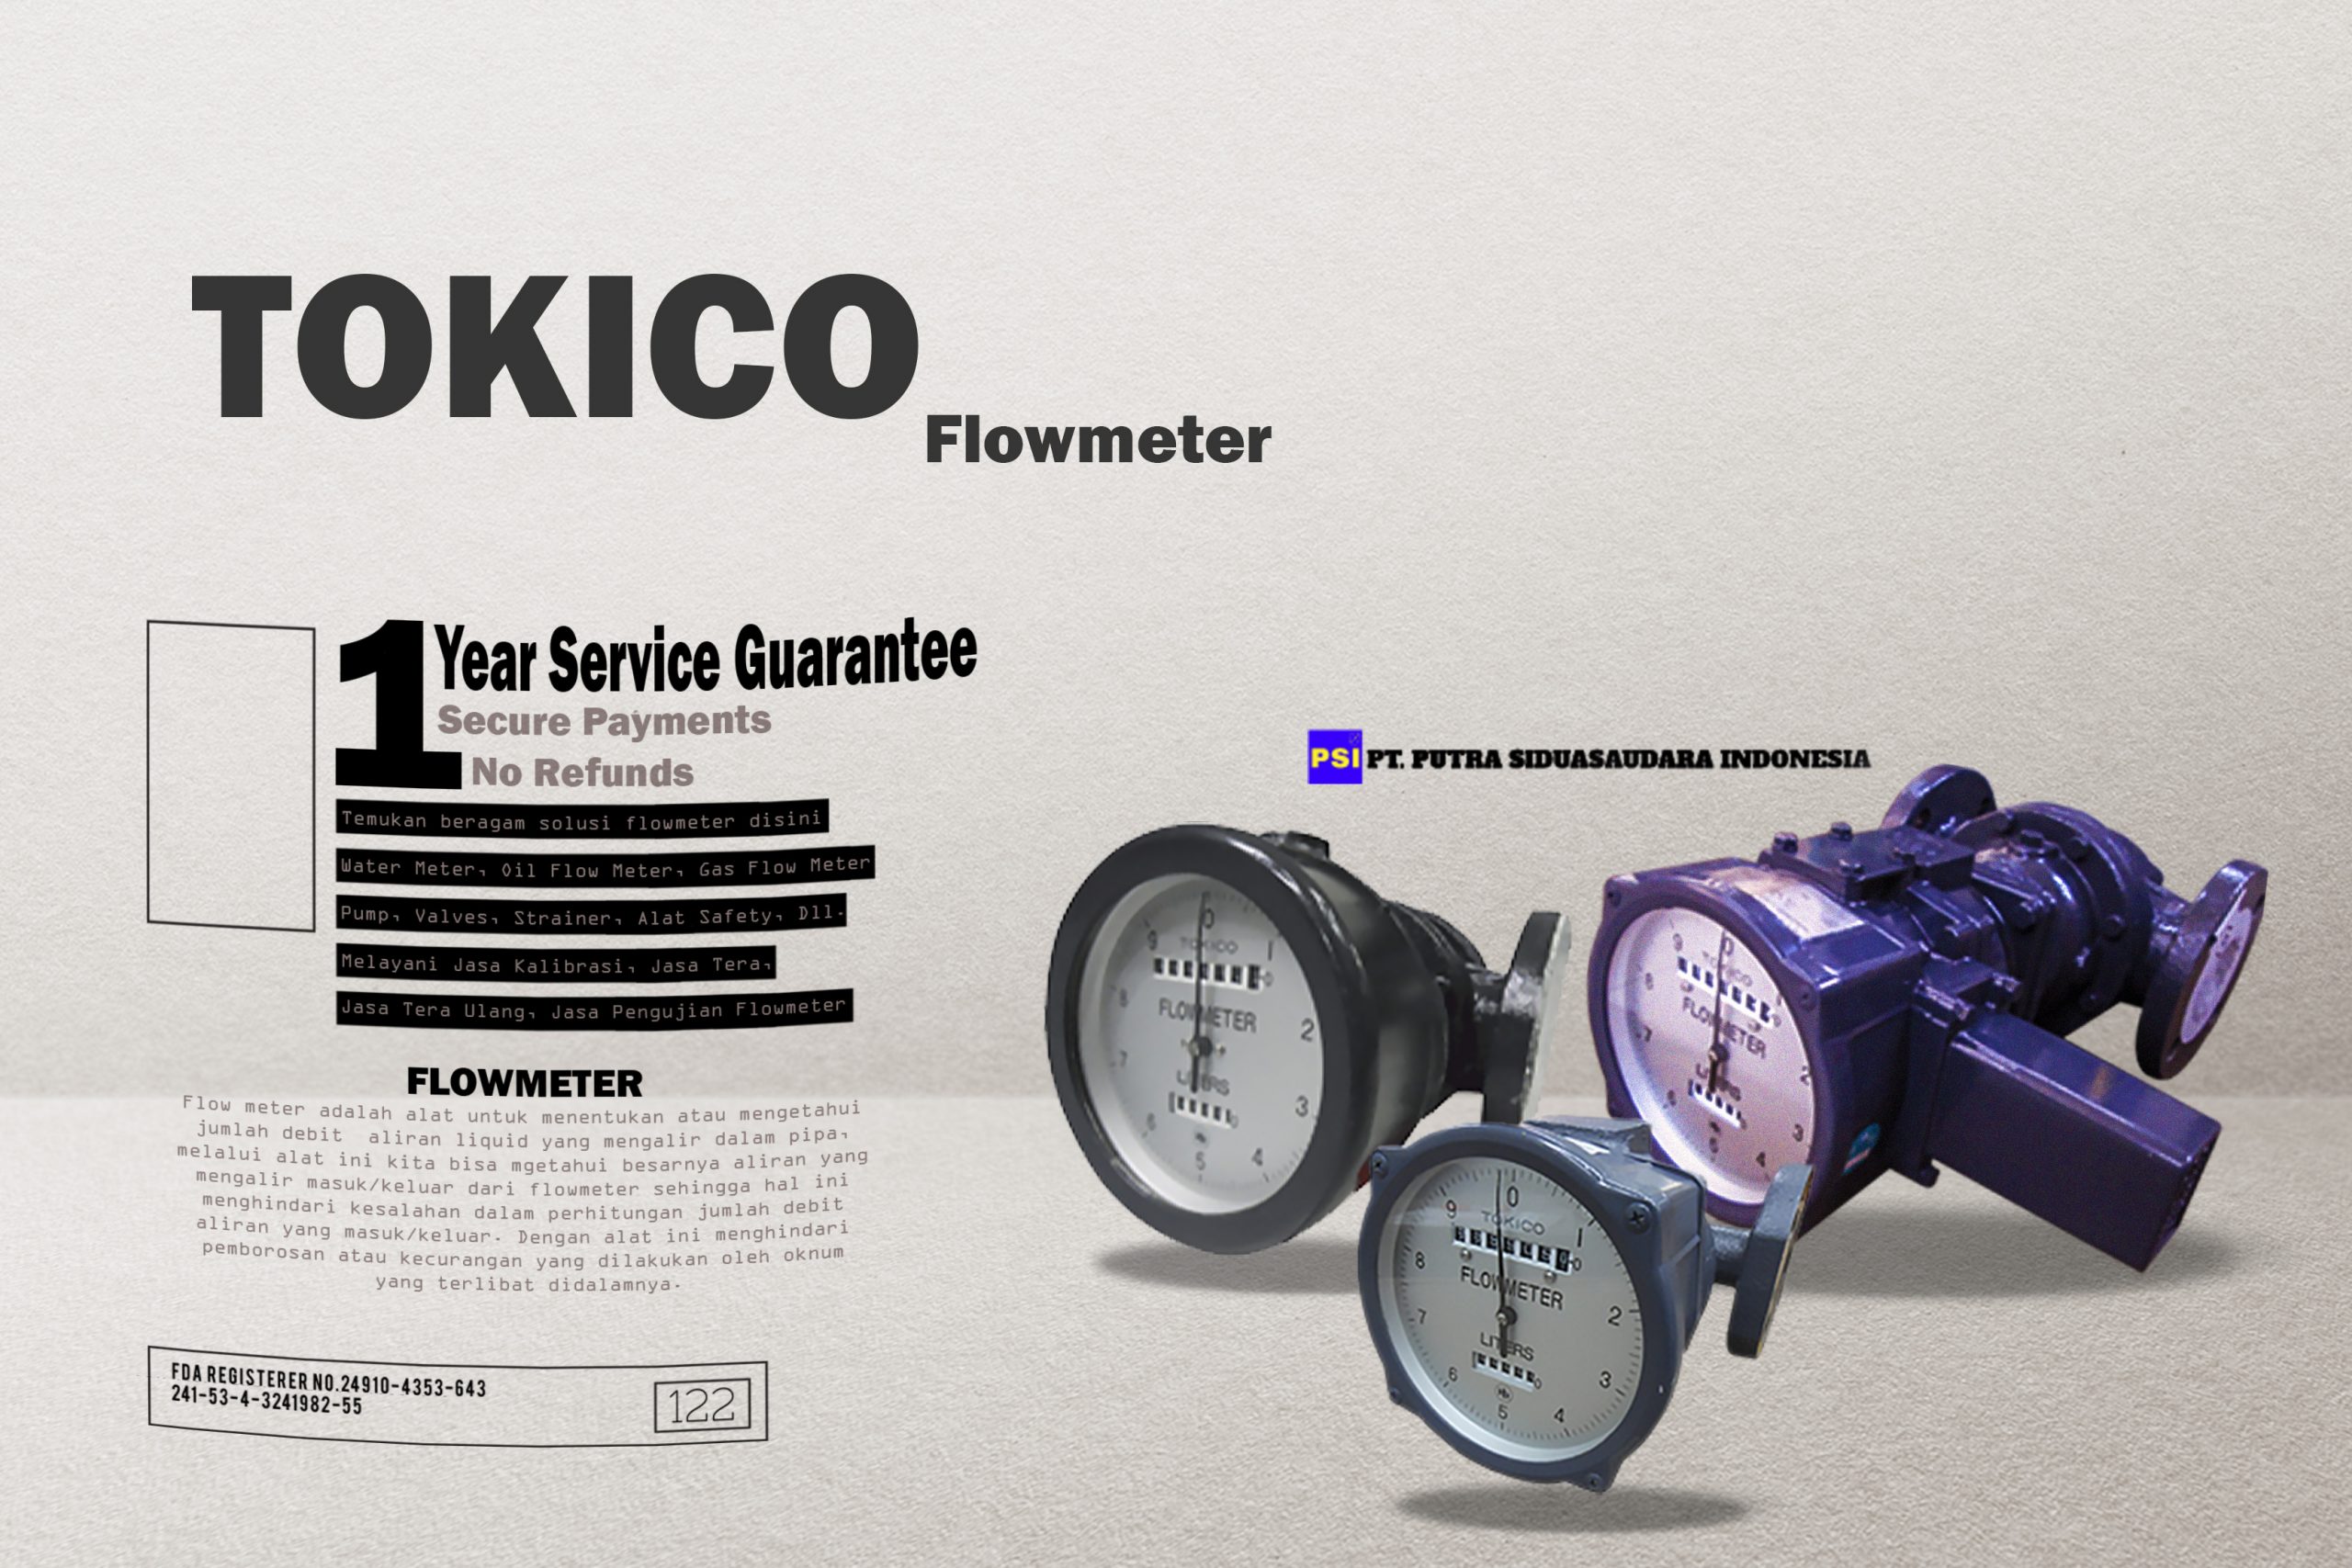 Tokico Flowmeter